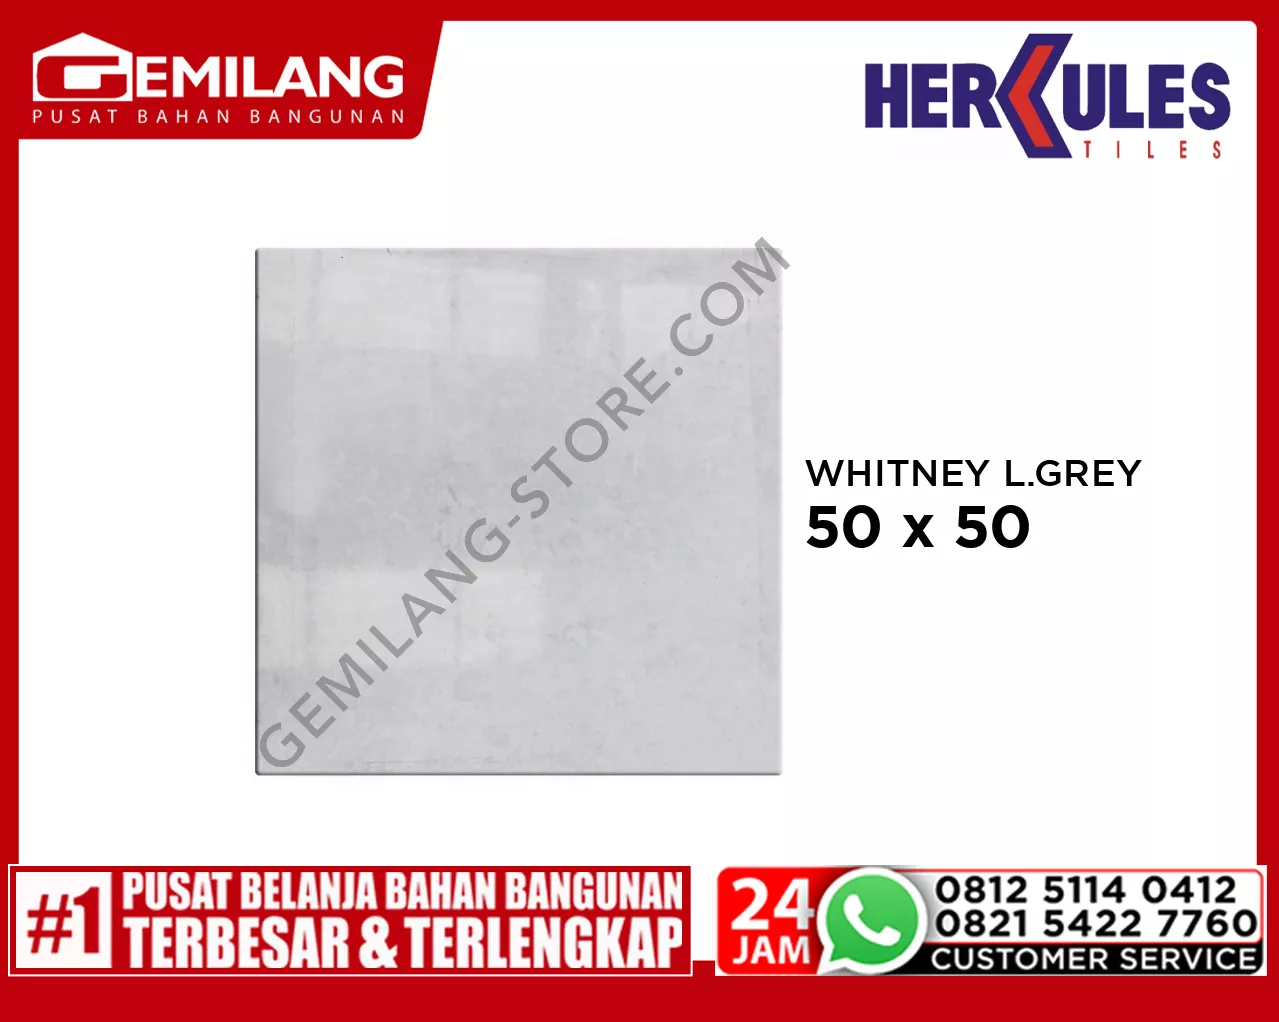 HERCULES WHITNEY L.GREY 50 x 50